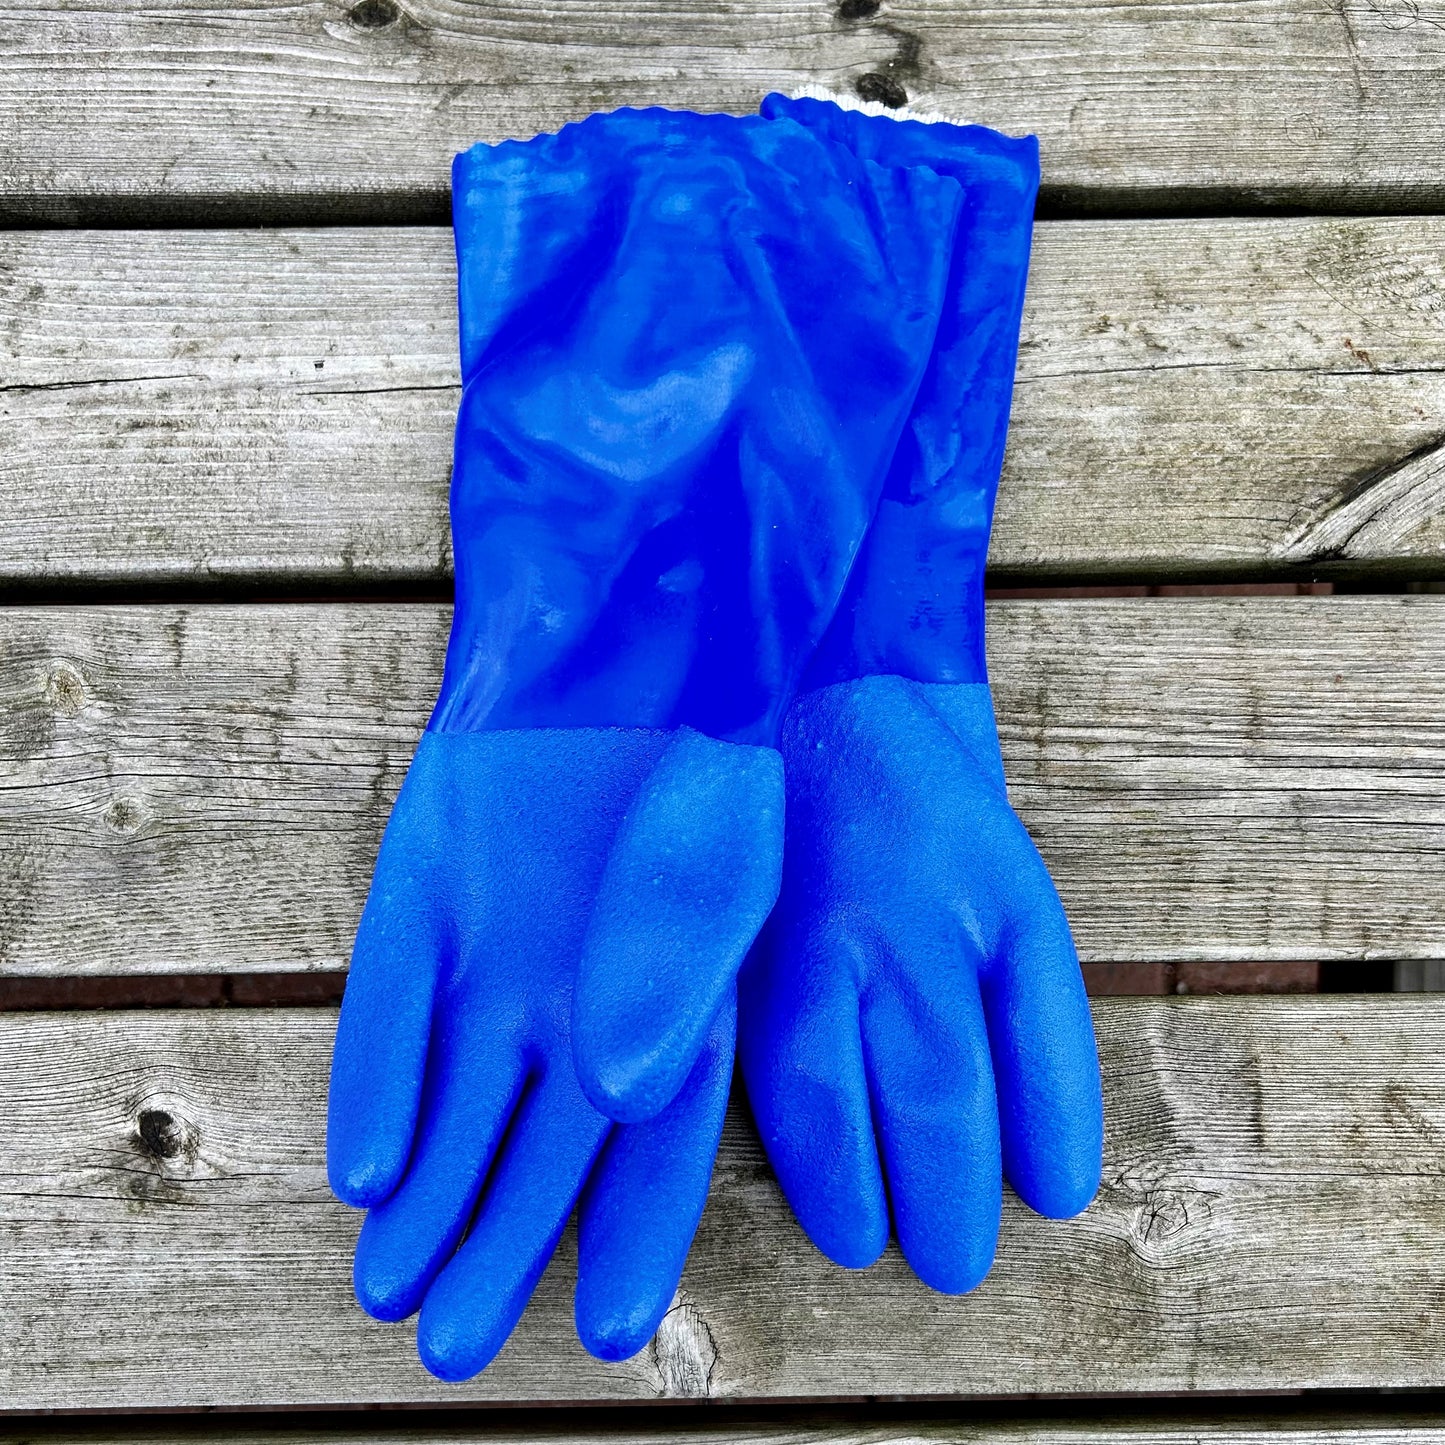 XLarge ChemRest 660 Chemical Protection Gloves